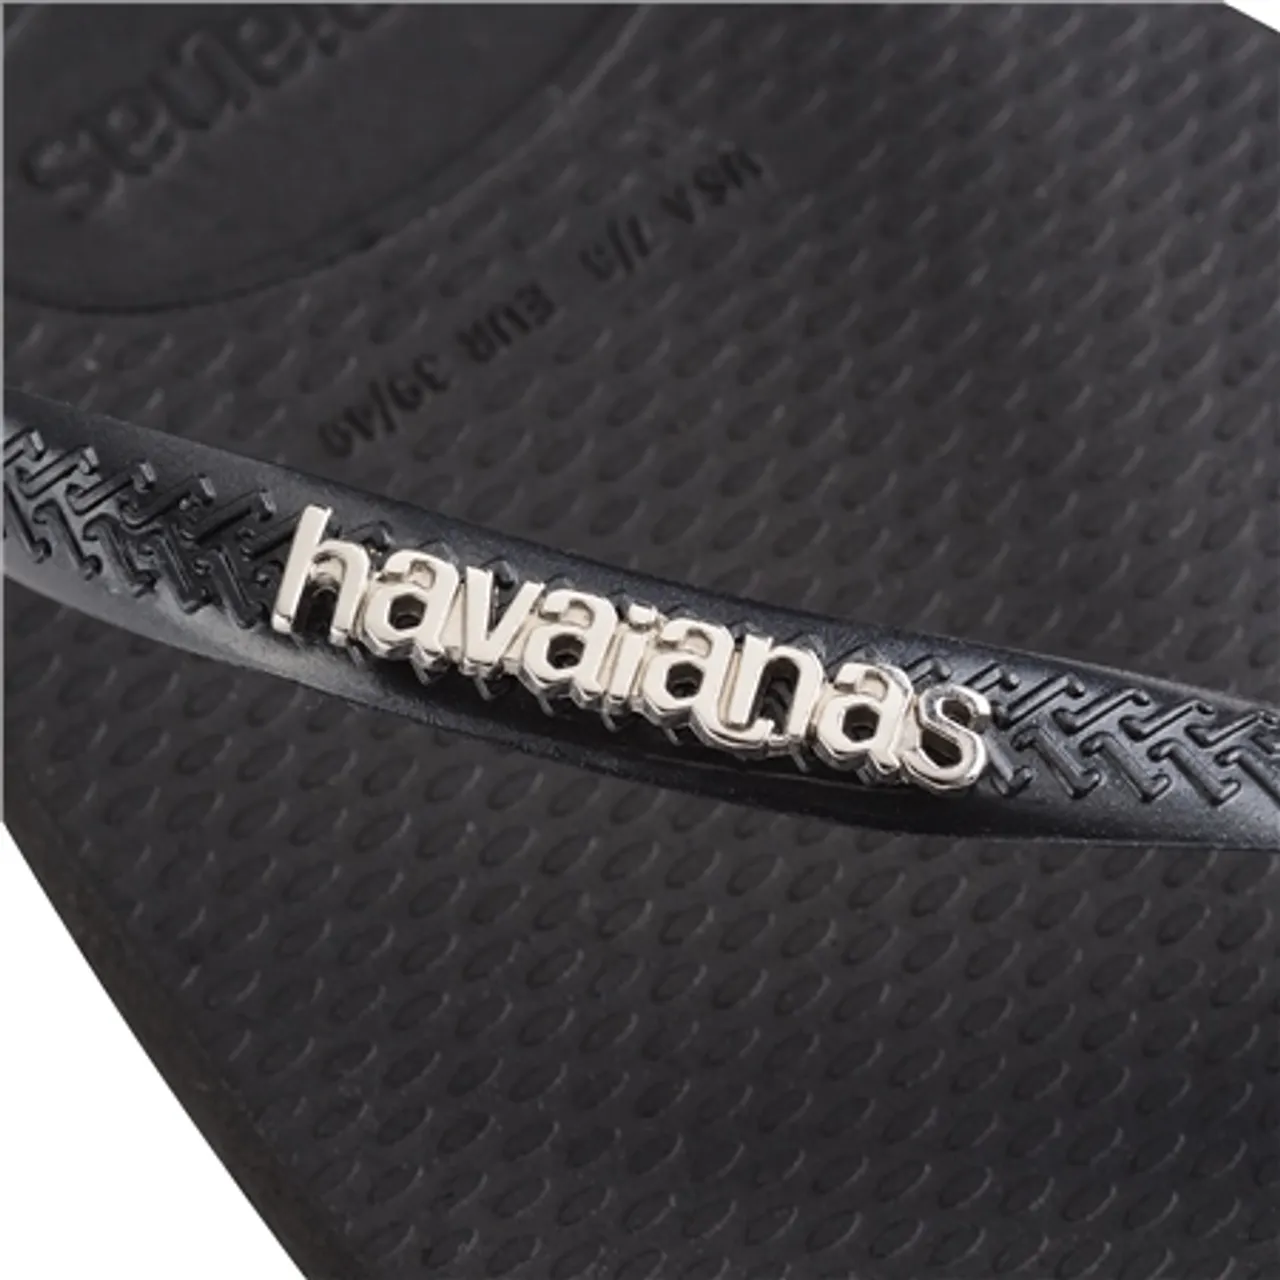 Havaianas Square Logo Metallic Flip Flops - Black & Silver - UK 3-4 (EU 35/36)